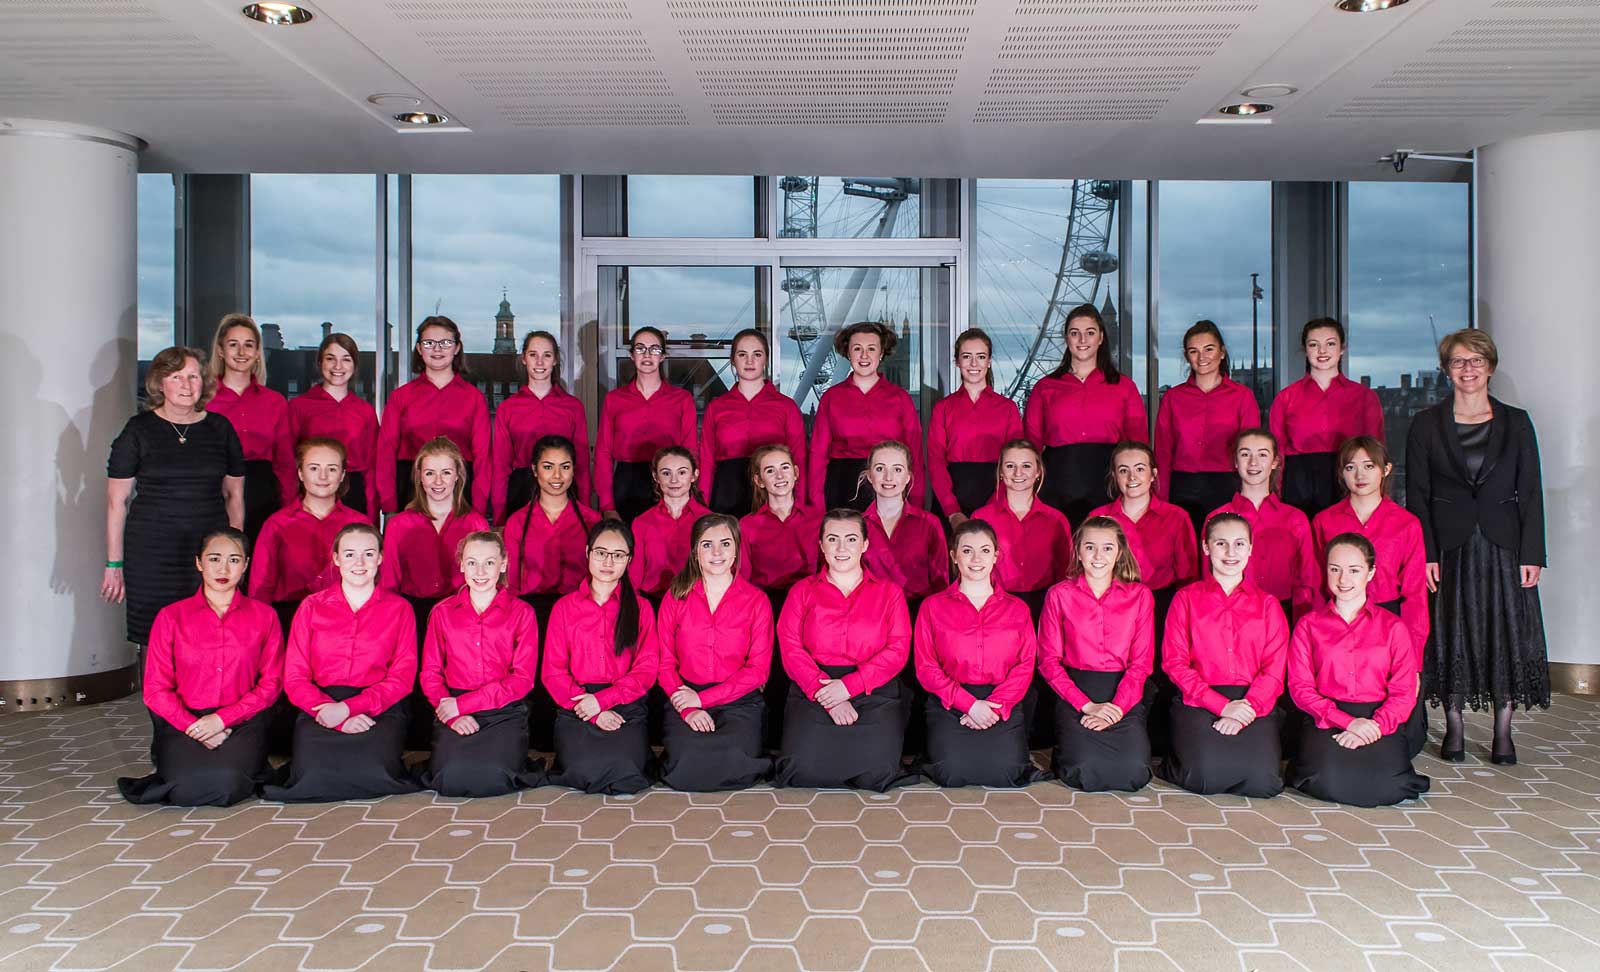 Harrogate Ladies’ College Chapel Choir at the Royal Festival Hall